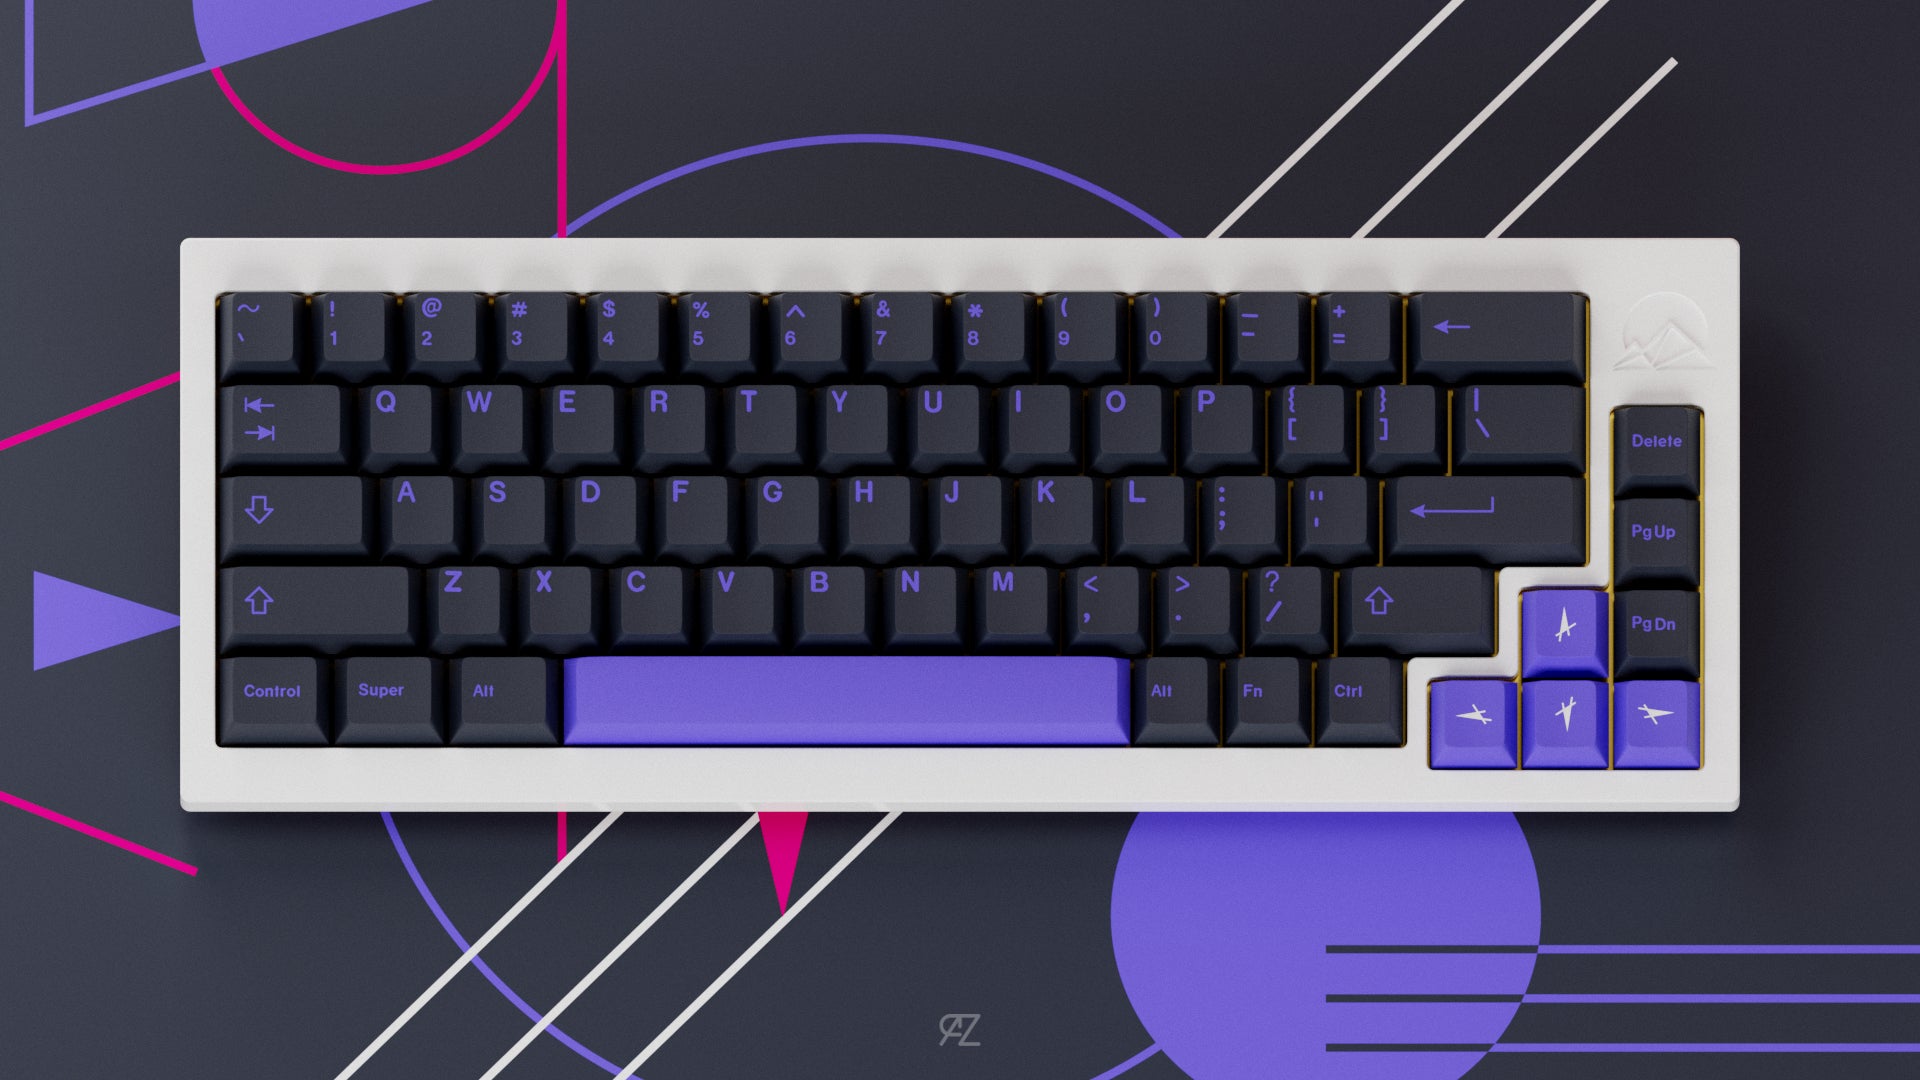 Alpine65 keyboard with GMK Avanguardia keycap set Base Kit, Love Darkness Kit and Novelties Kit